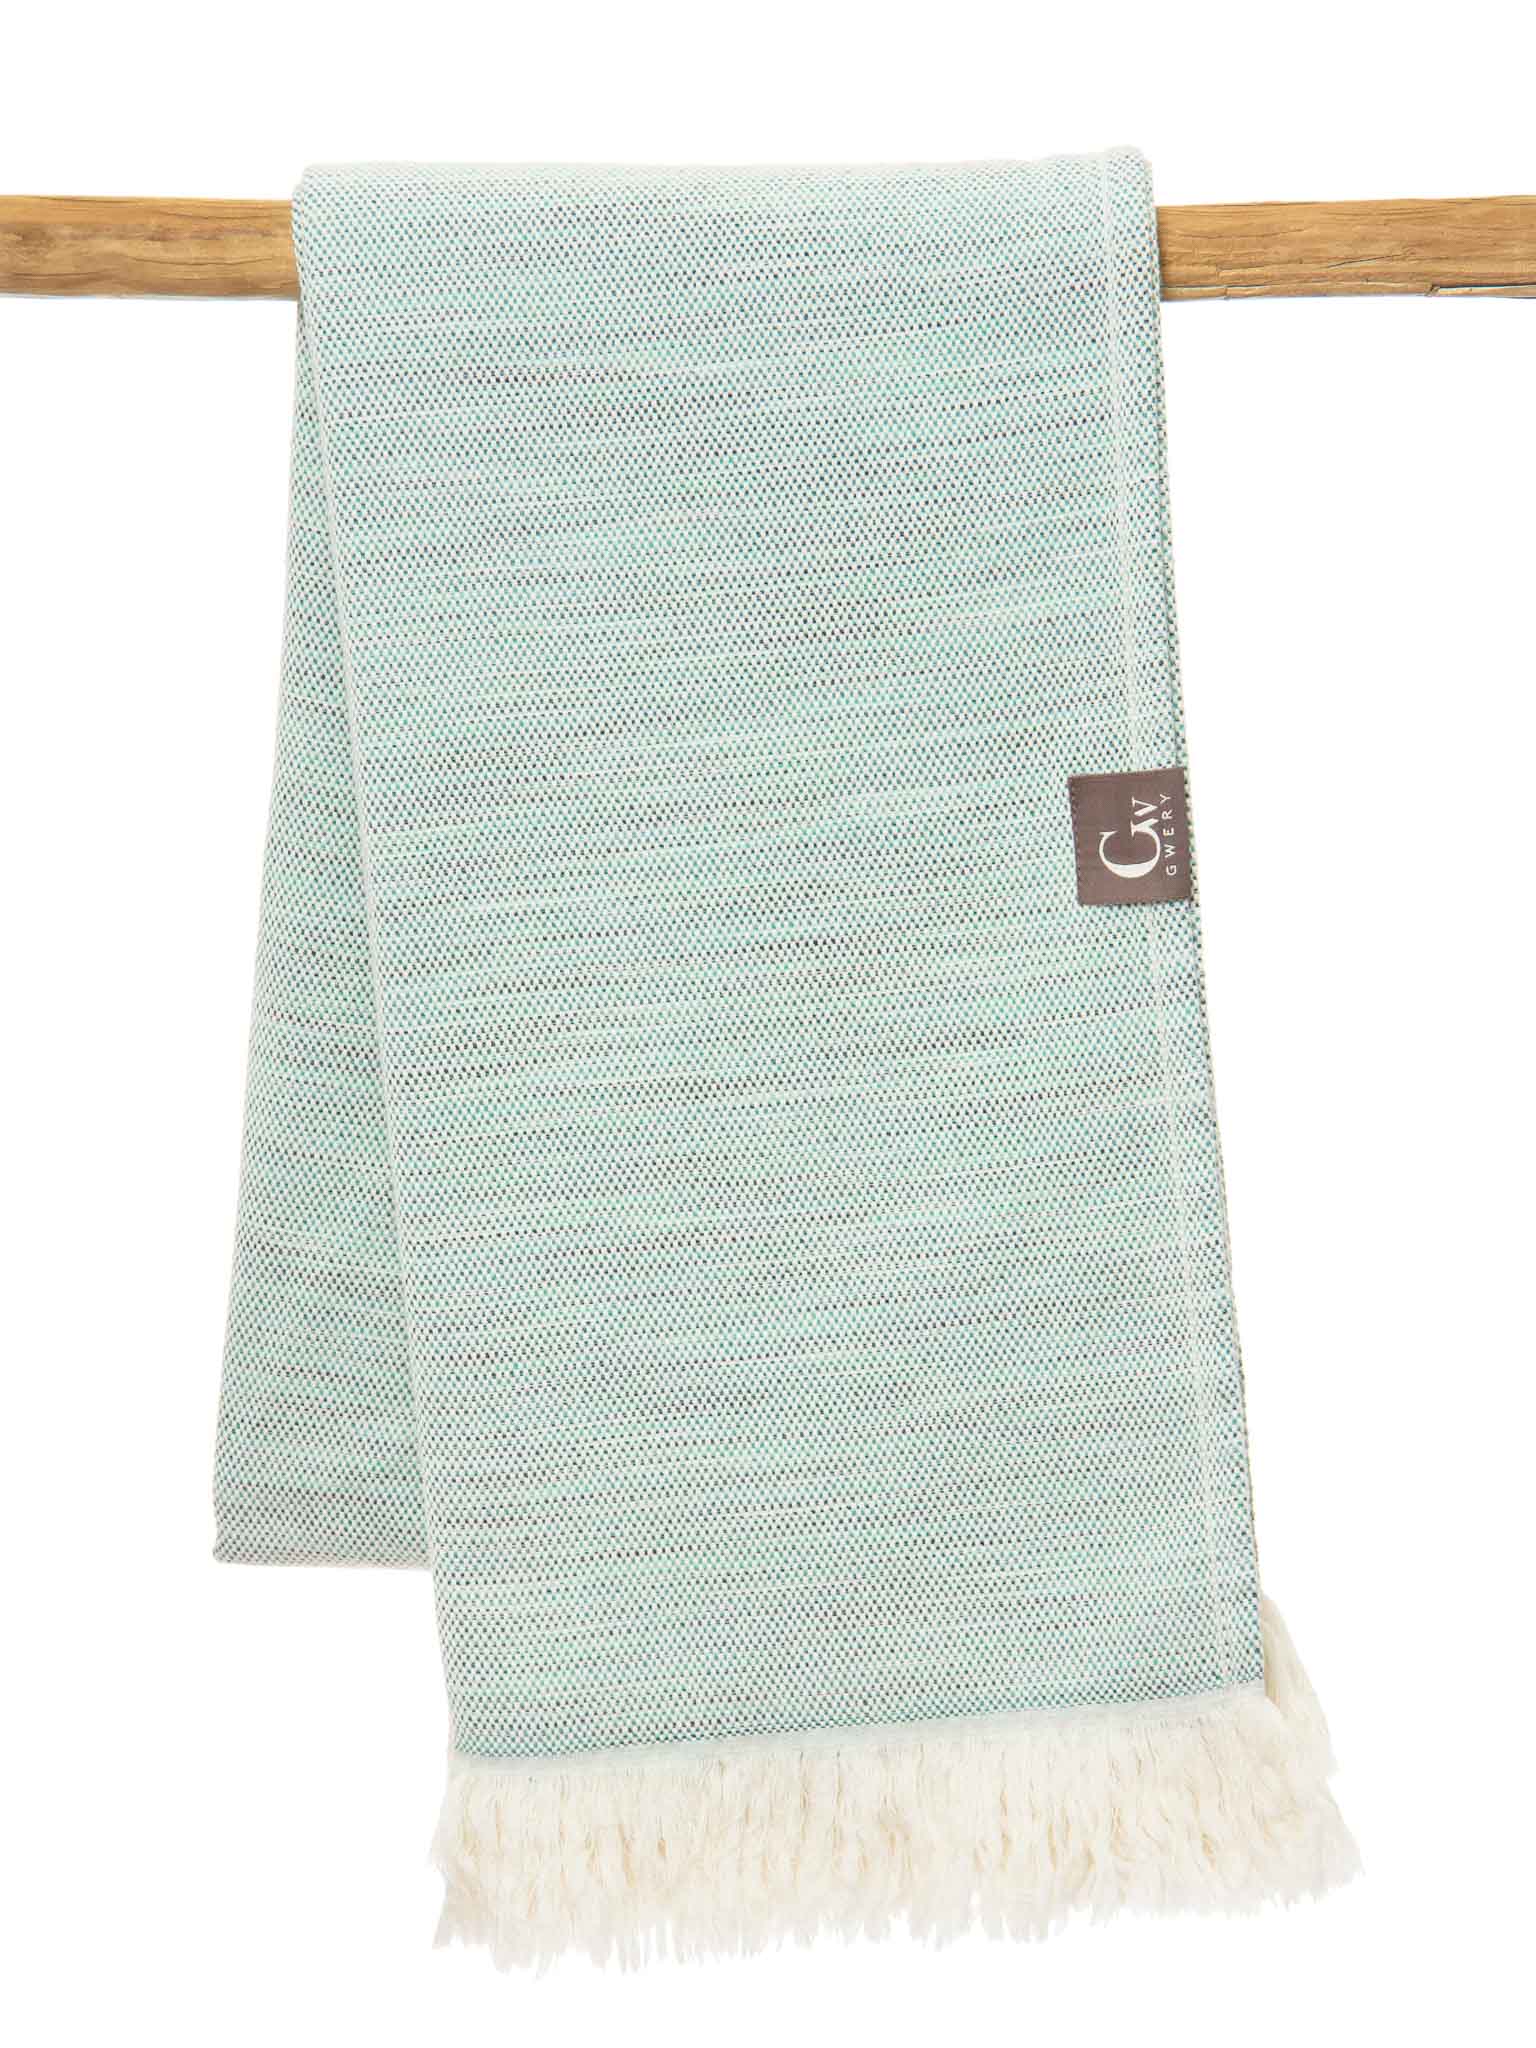 Green patterned lightweight beach towel folded